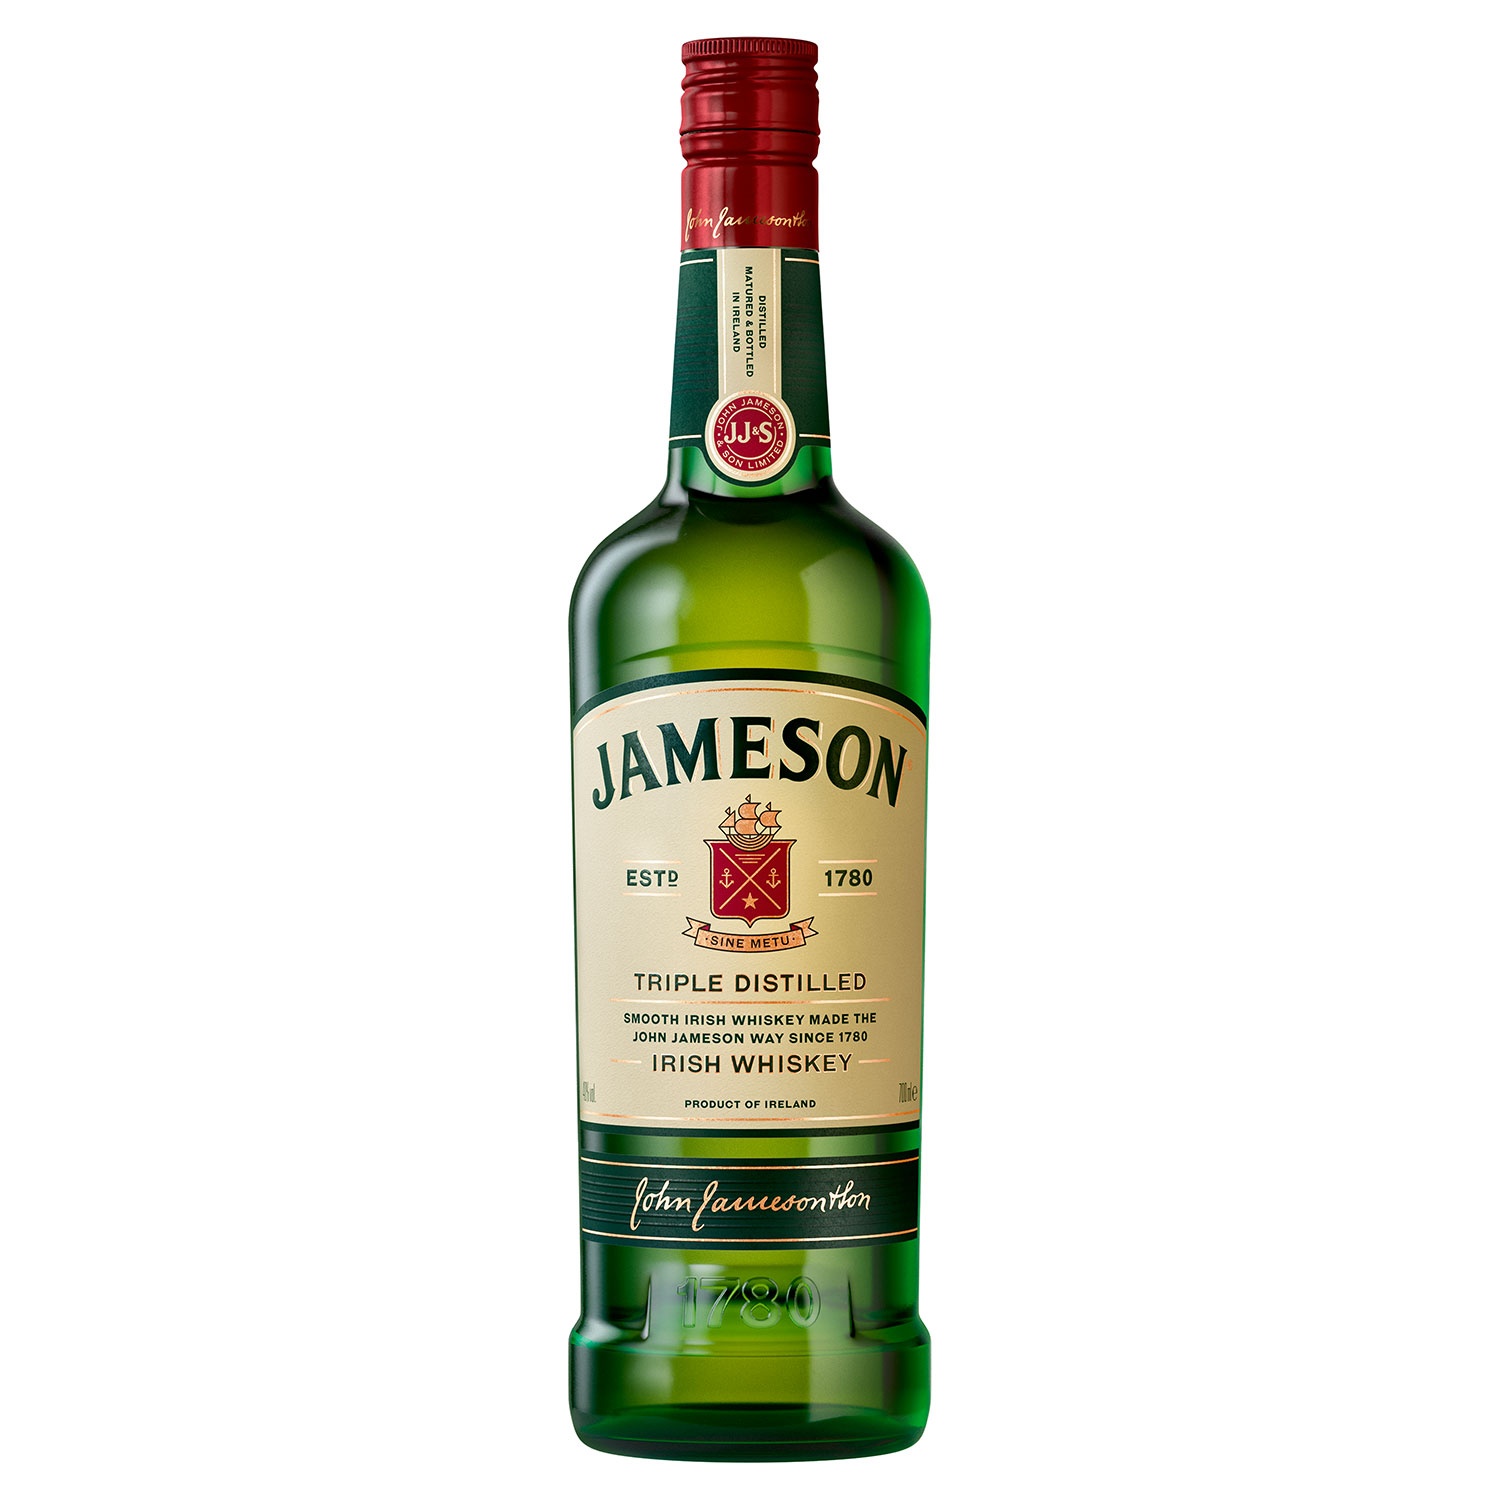 JAMESON Irish Whiskey 0,7 l